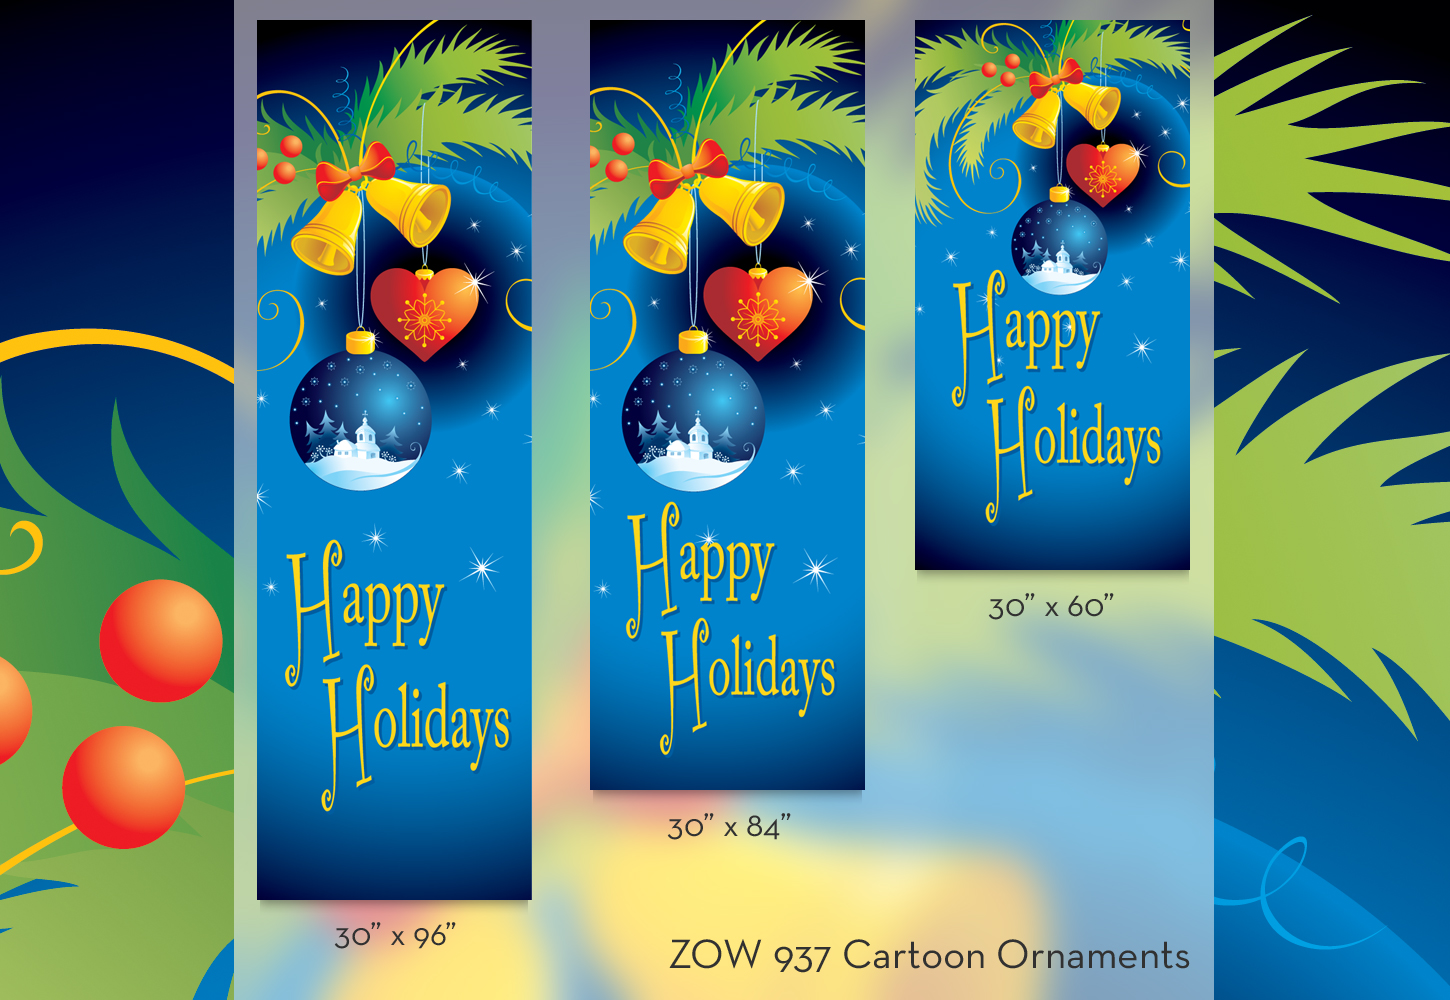 ZOW 937 Cartoon Ornaments